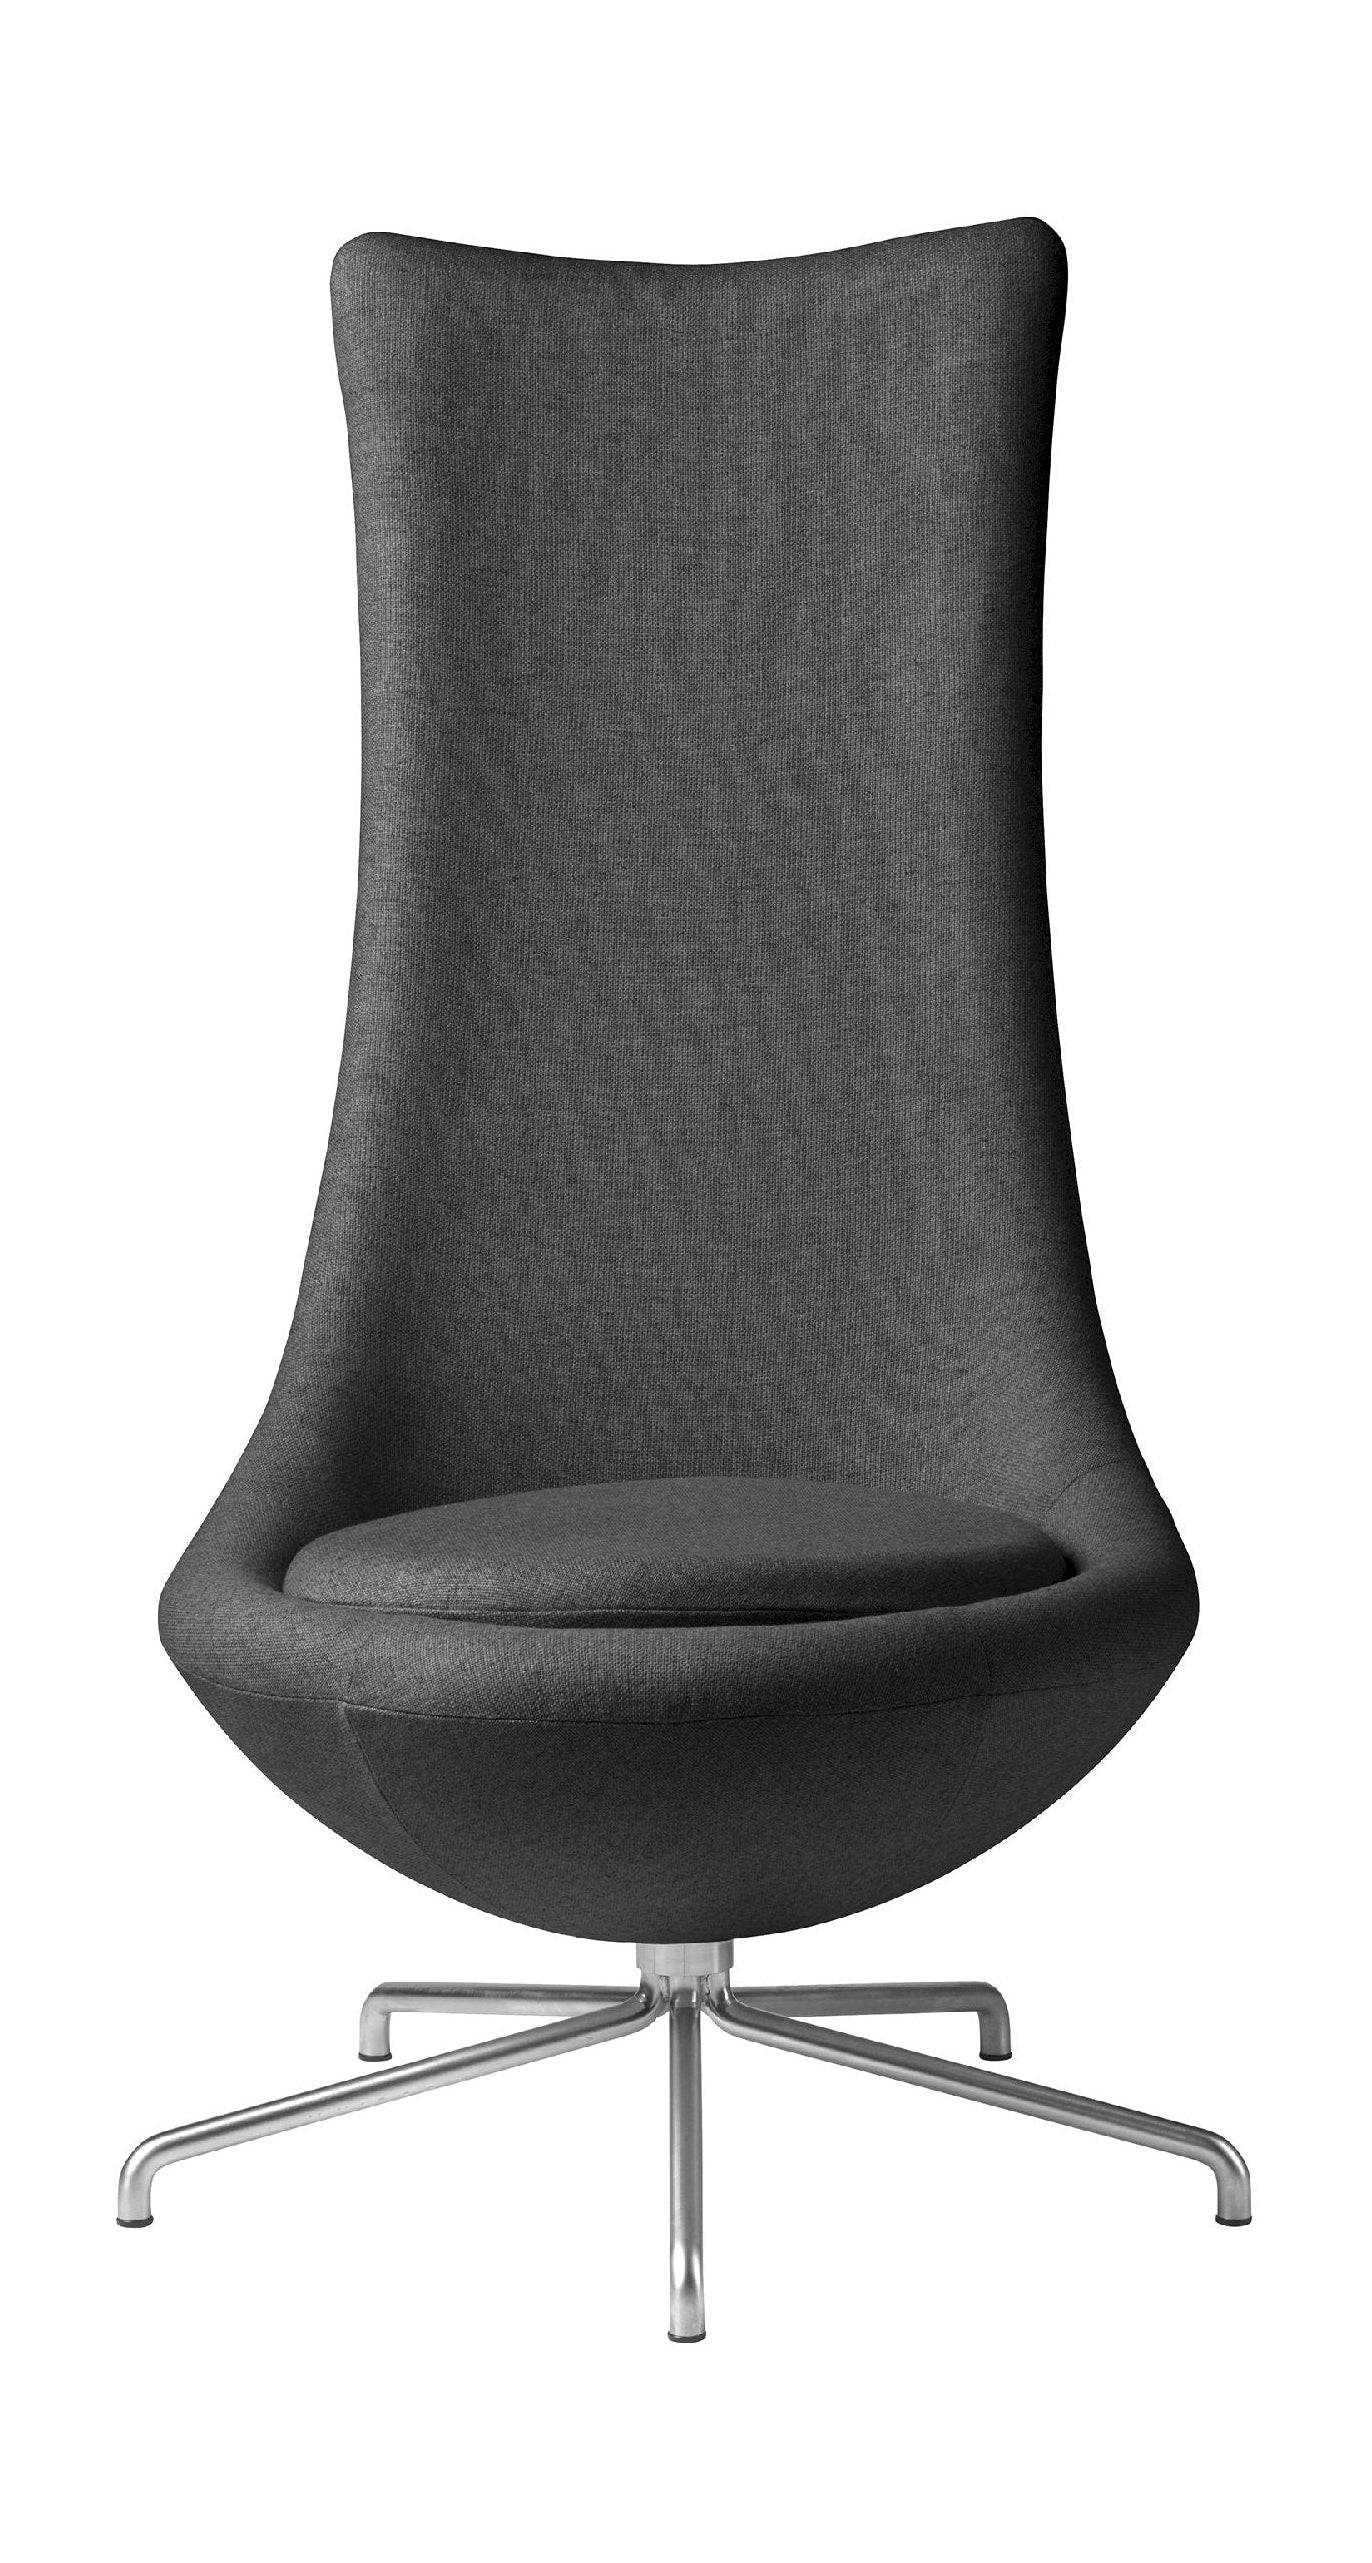 Fdb Møbler L41 Bellamie Lounge Chair With Swivel, Dark Grey/Metal